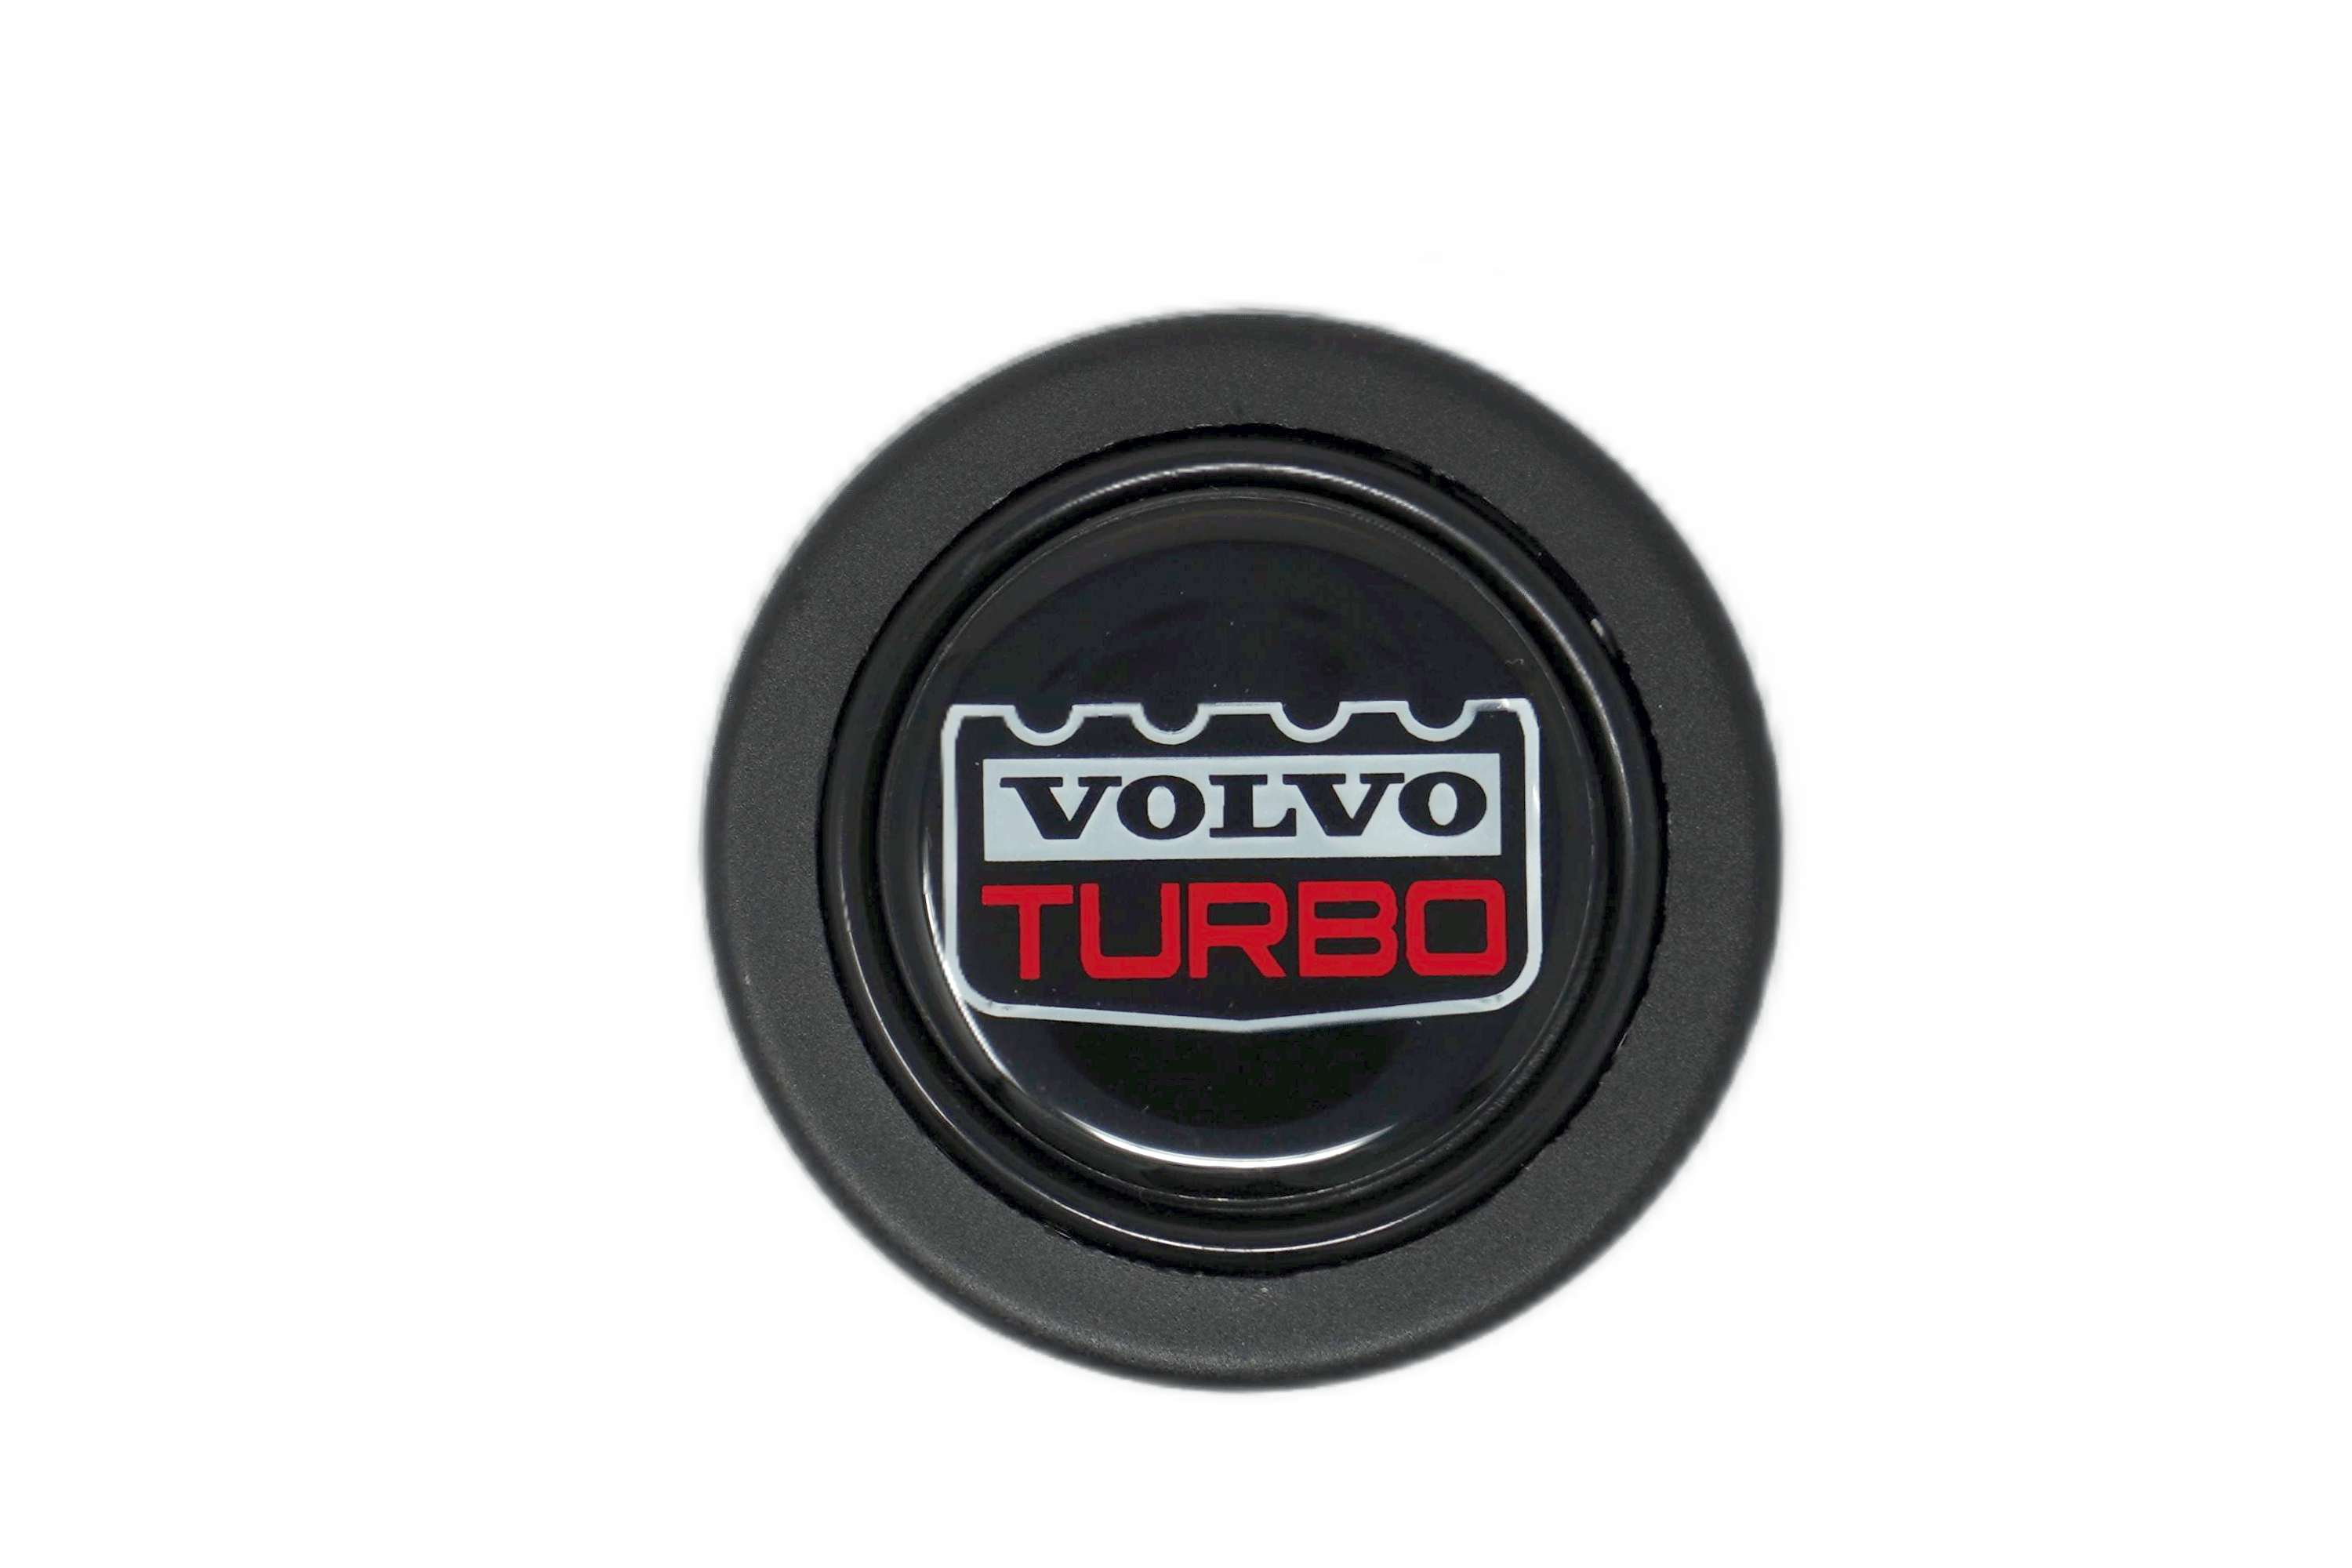 Volvo Turbo Horn Button